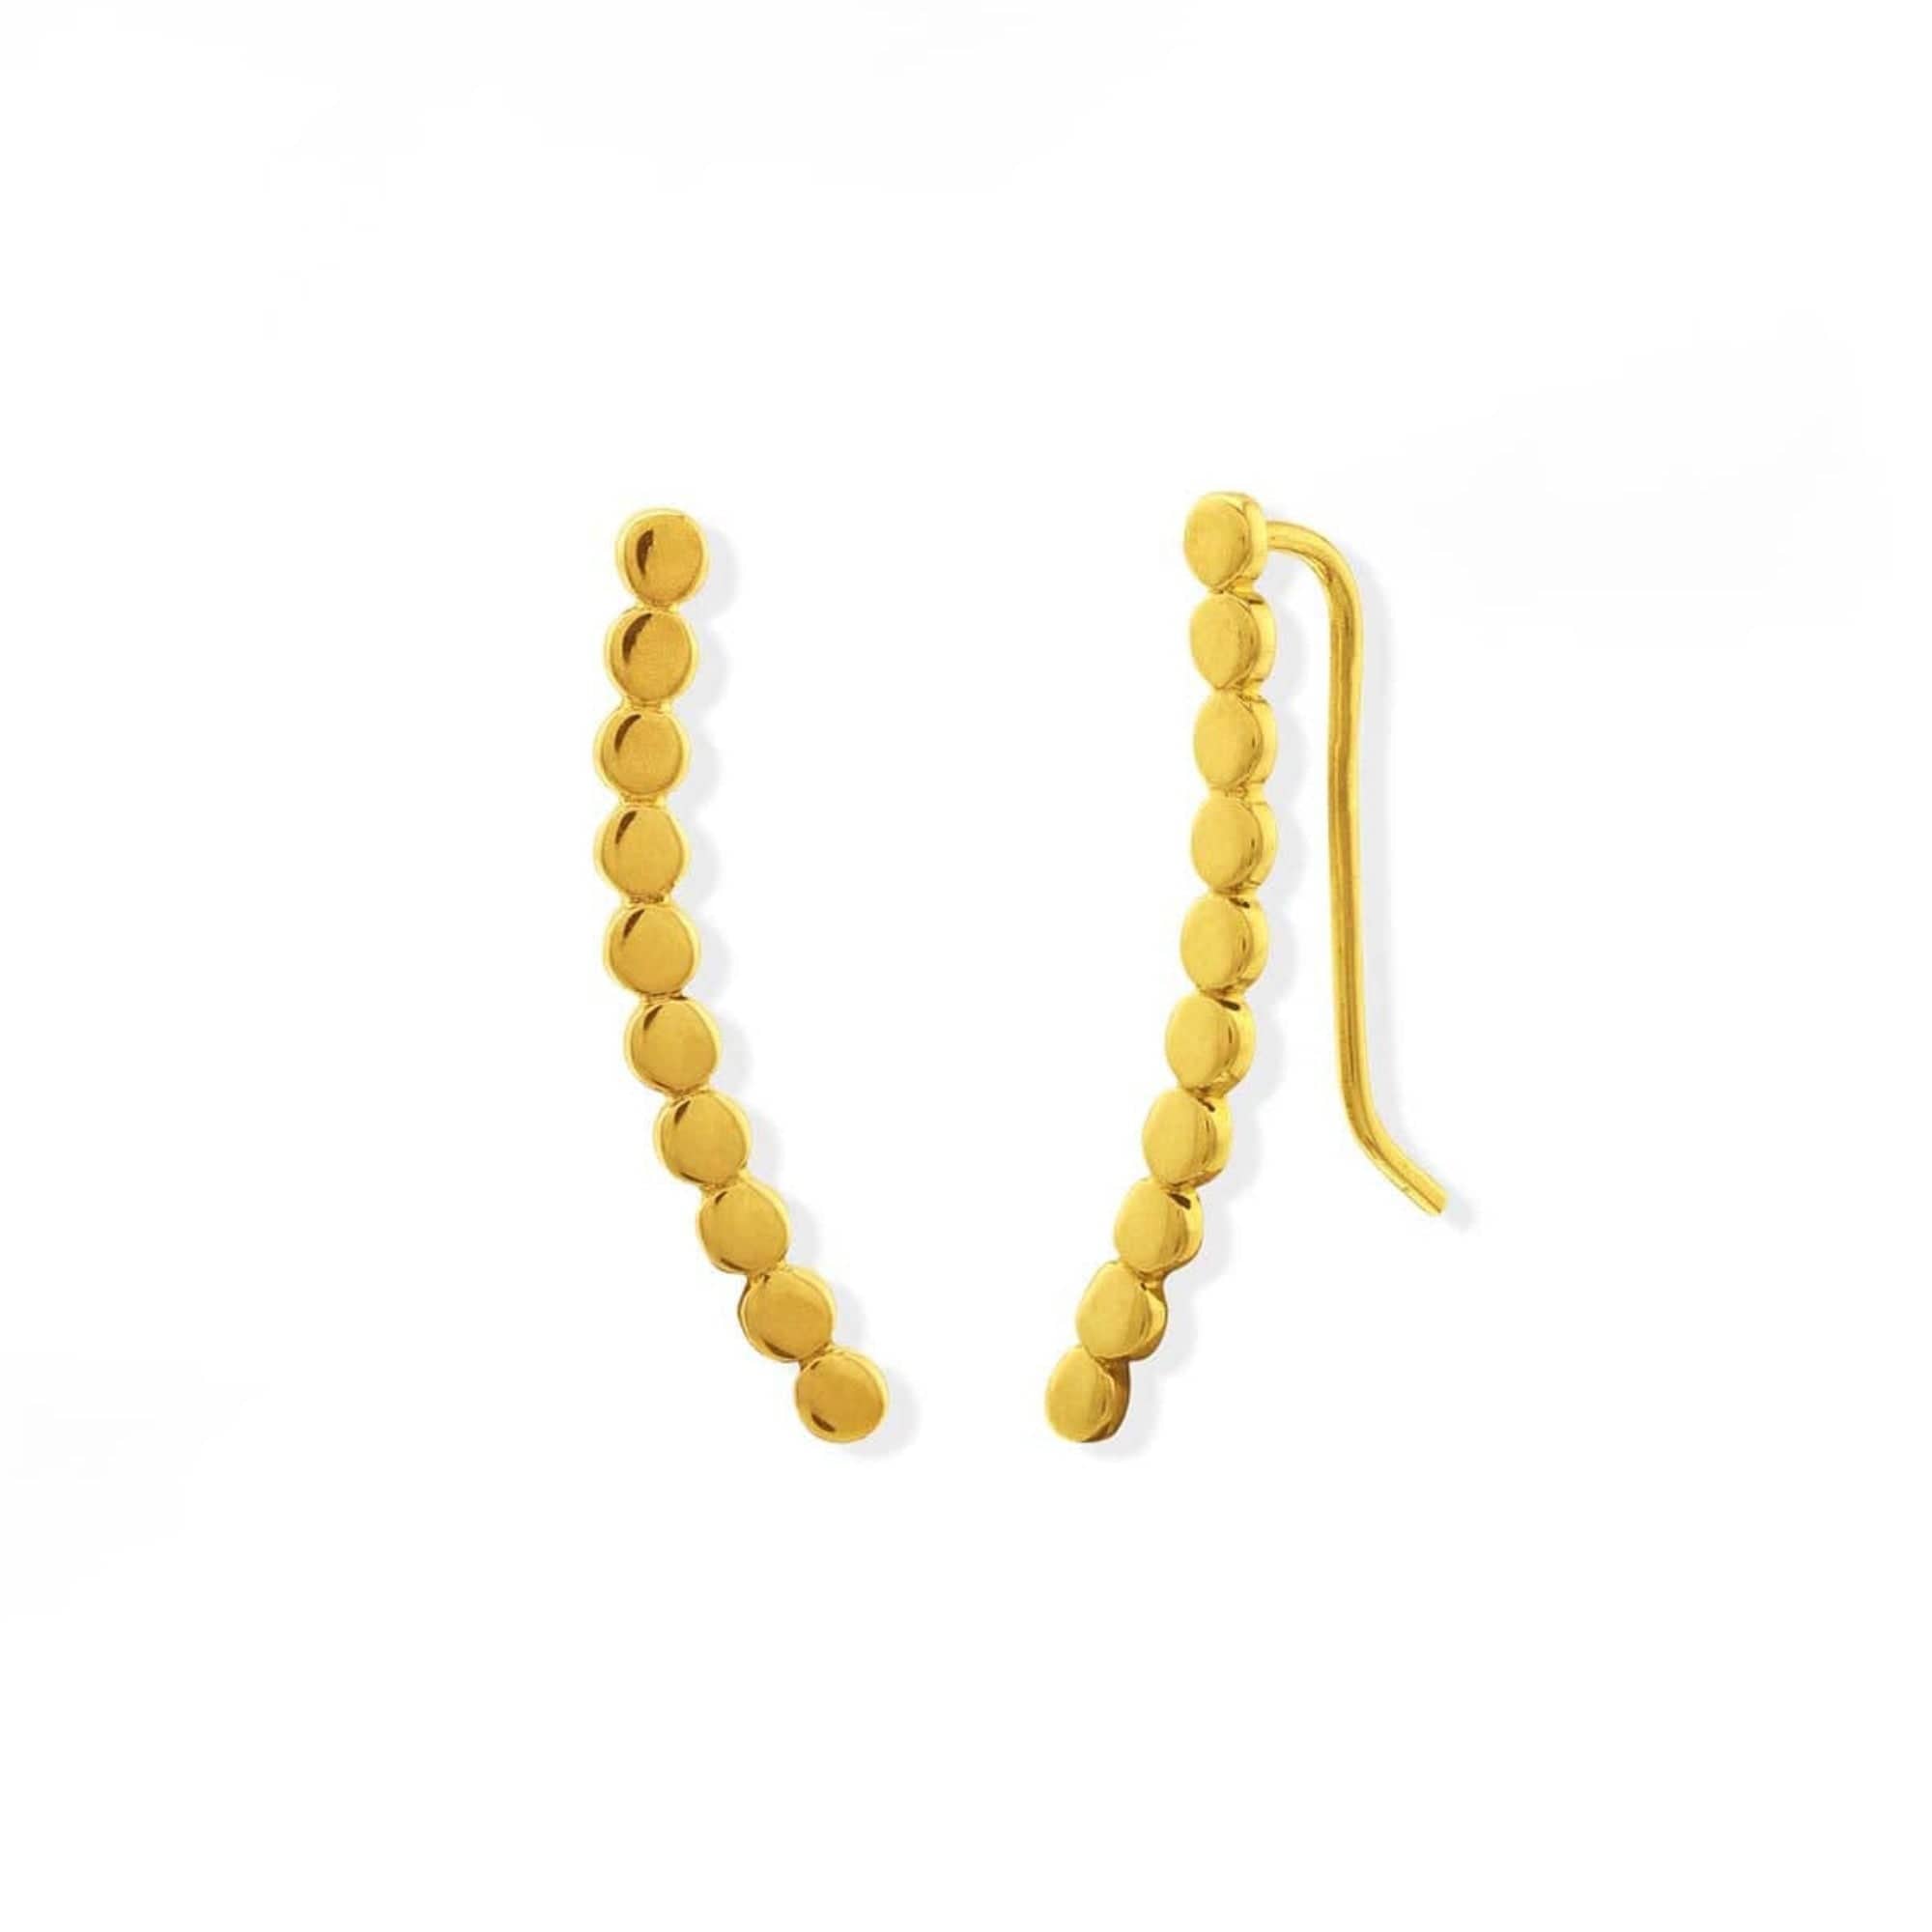 Boma Jewelry Earrings 14K Gold Vermeil Curved Dot Long Bar Ear Crawlers